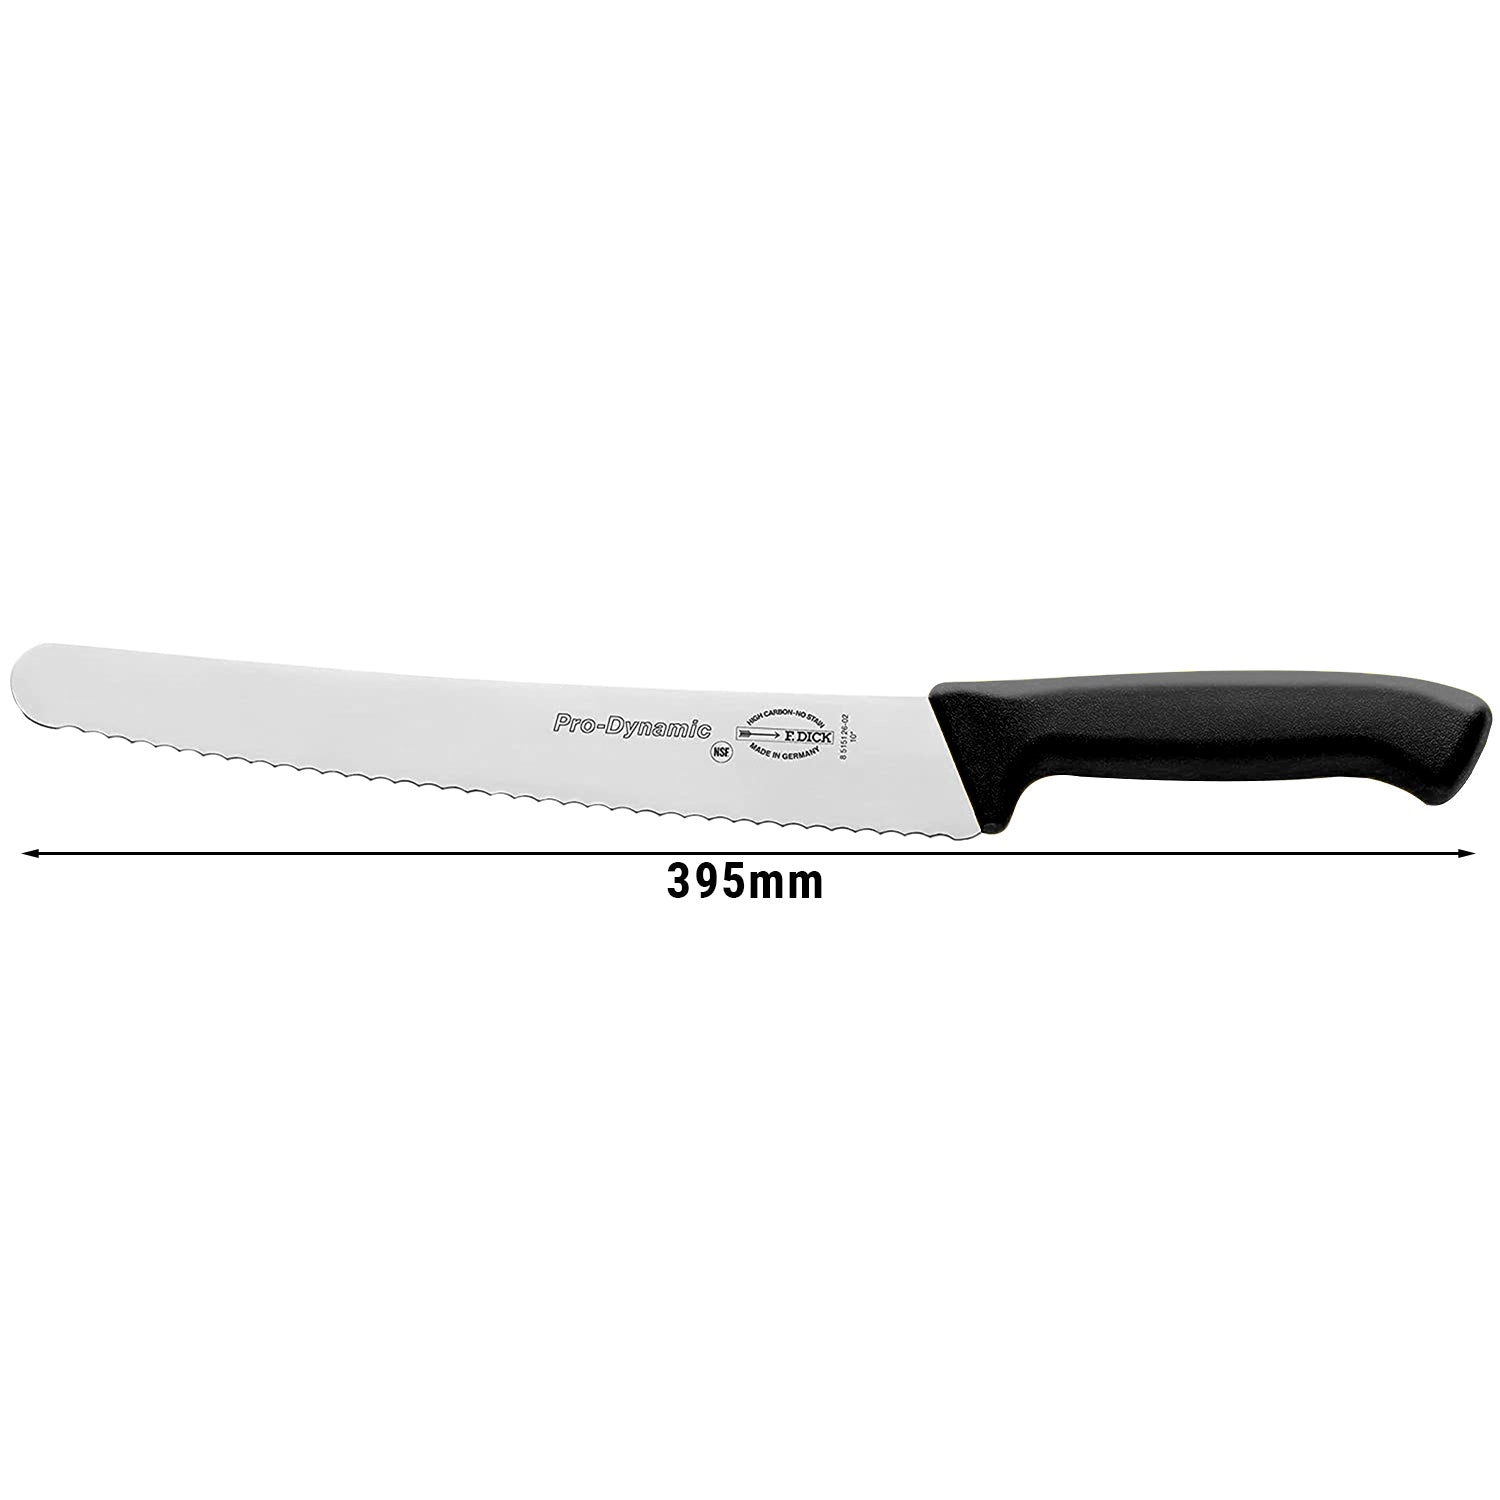 F. DICK kagekniv/universalkniv - 26 cm